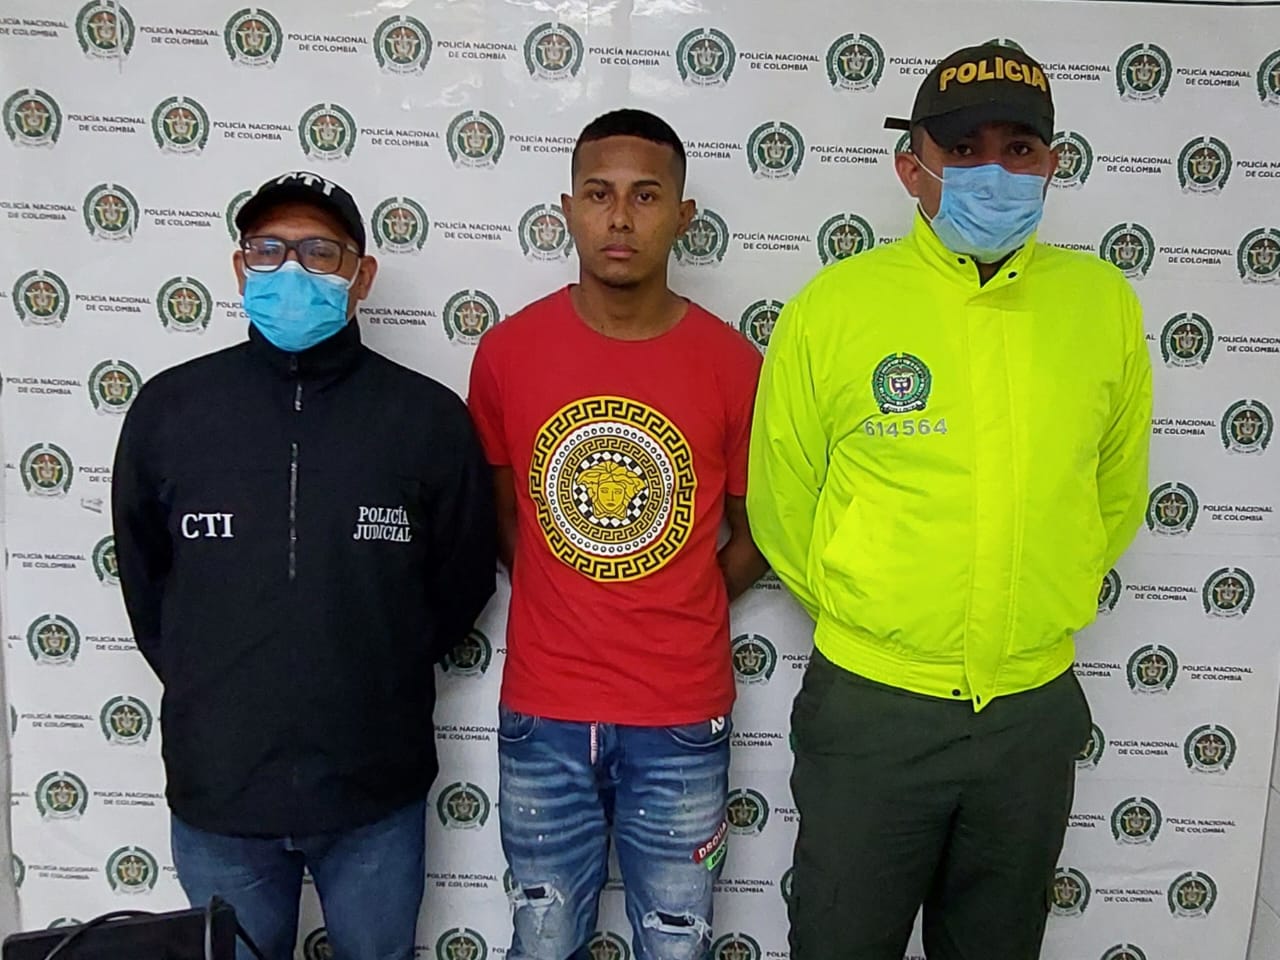 Authorities capture alias 'Marlon' in Bogotá, accused of belonging to the Clan del Golfo